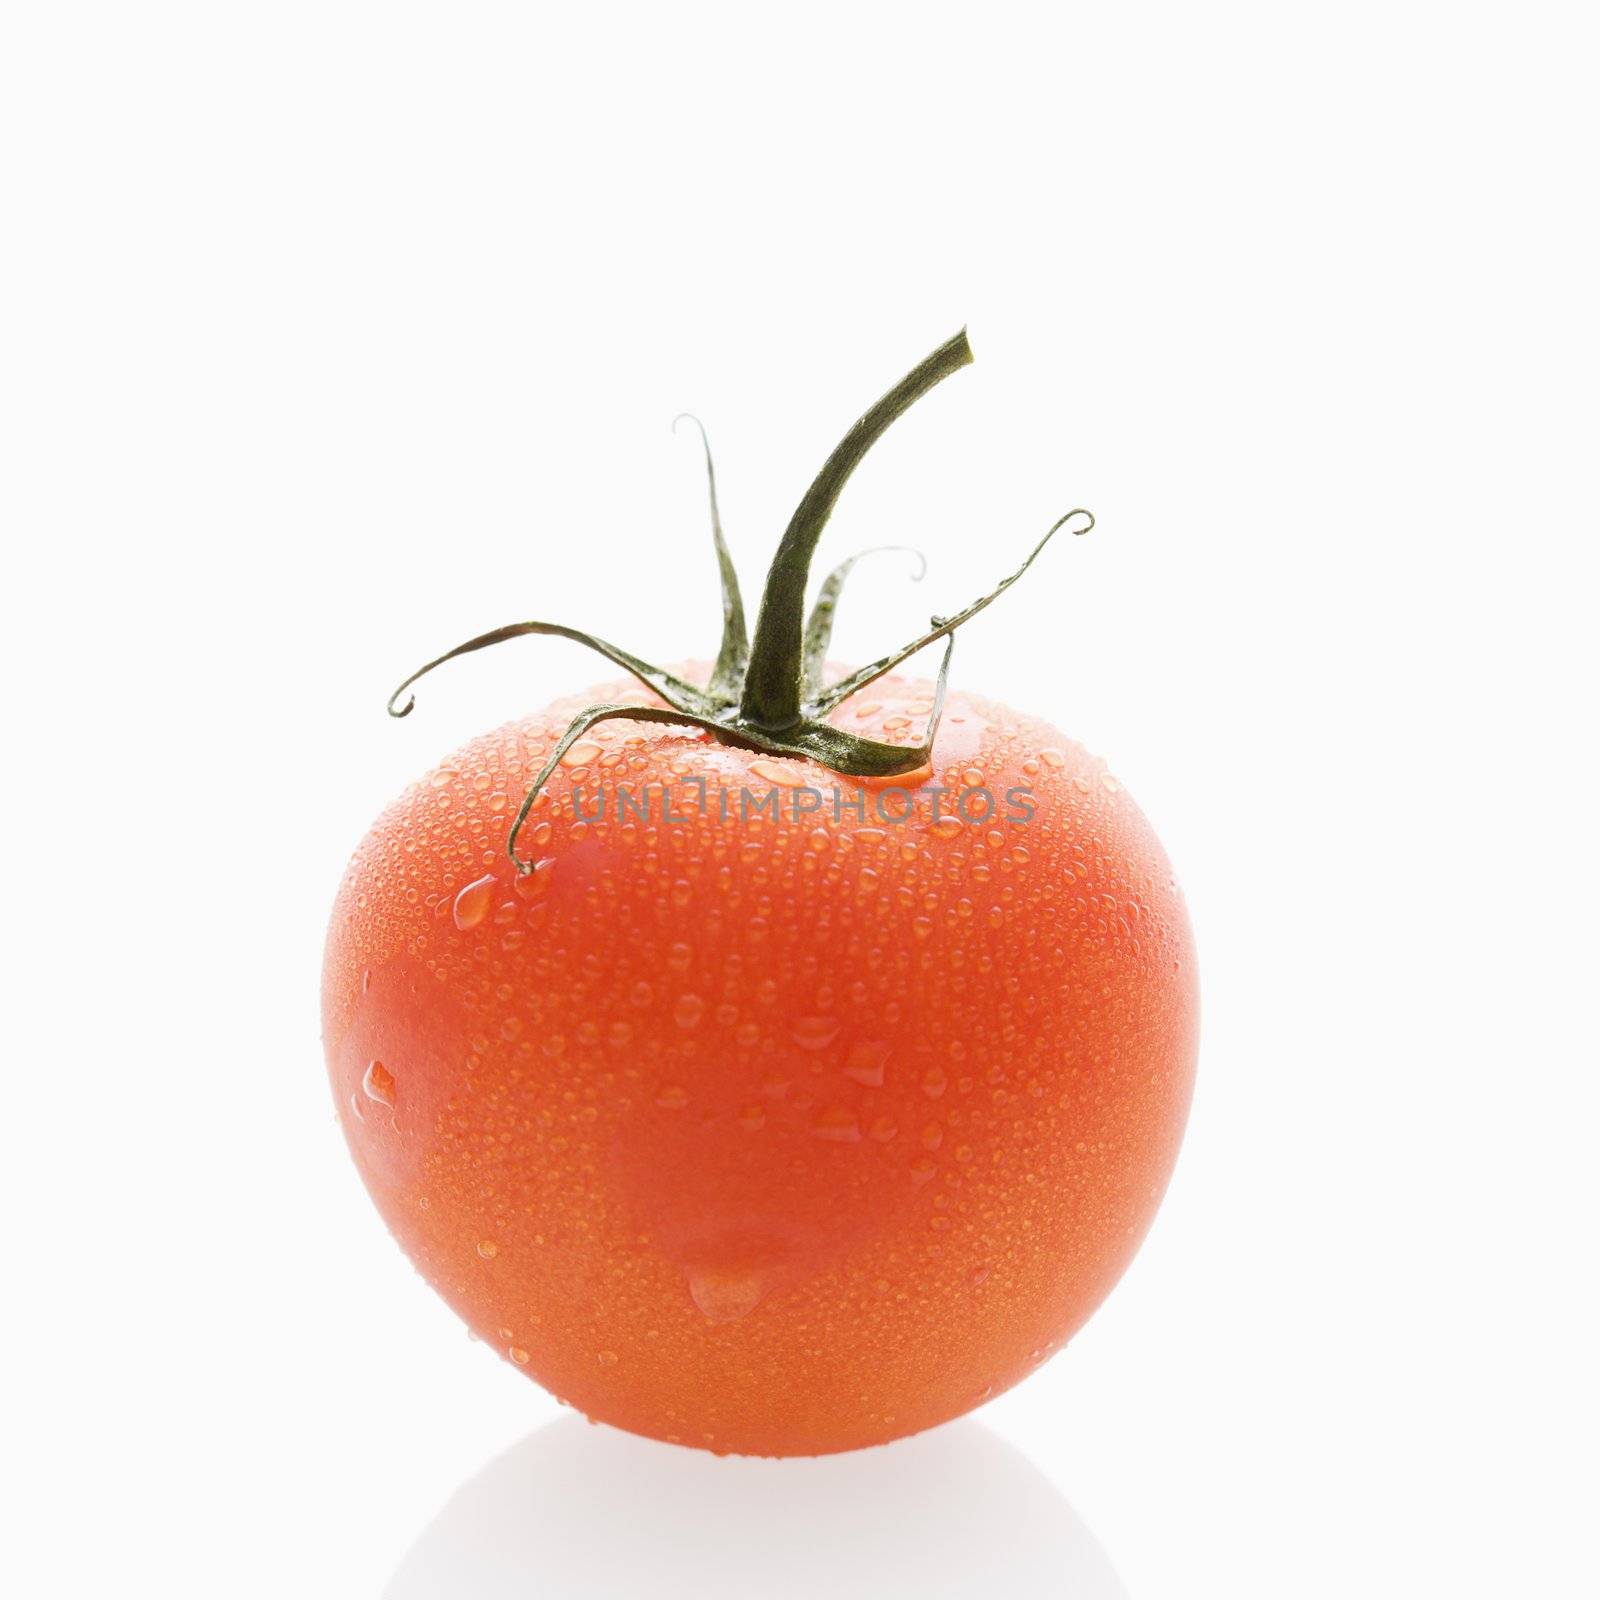 Still life of wet red ripe tomato against white background.